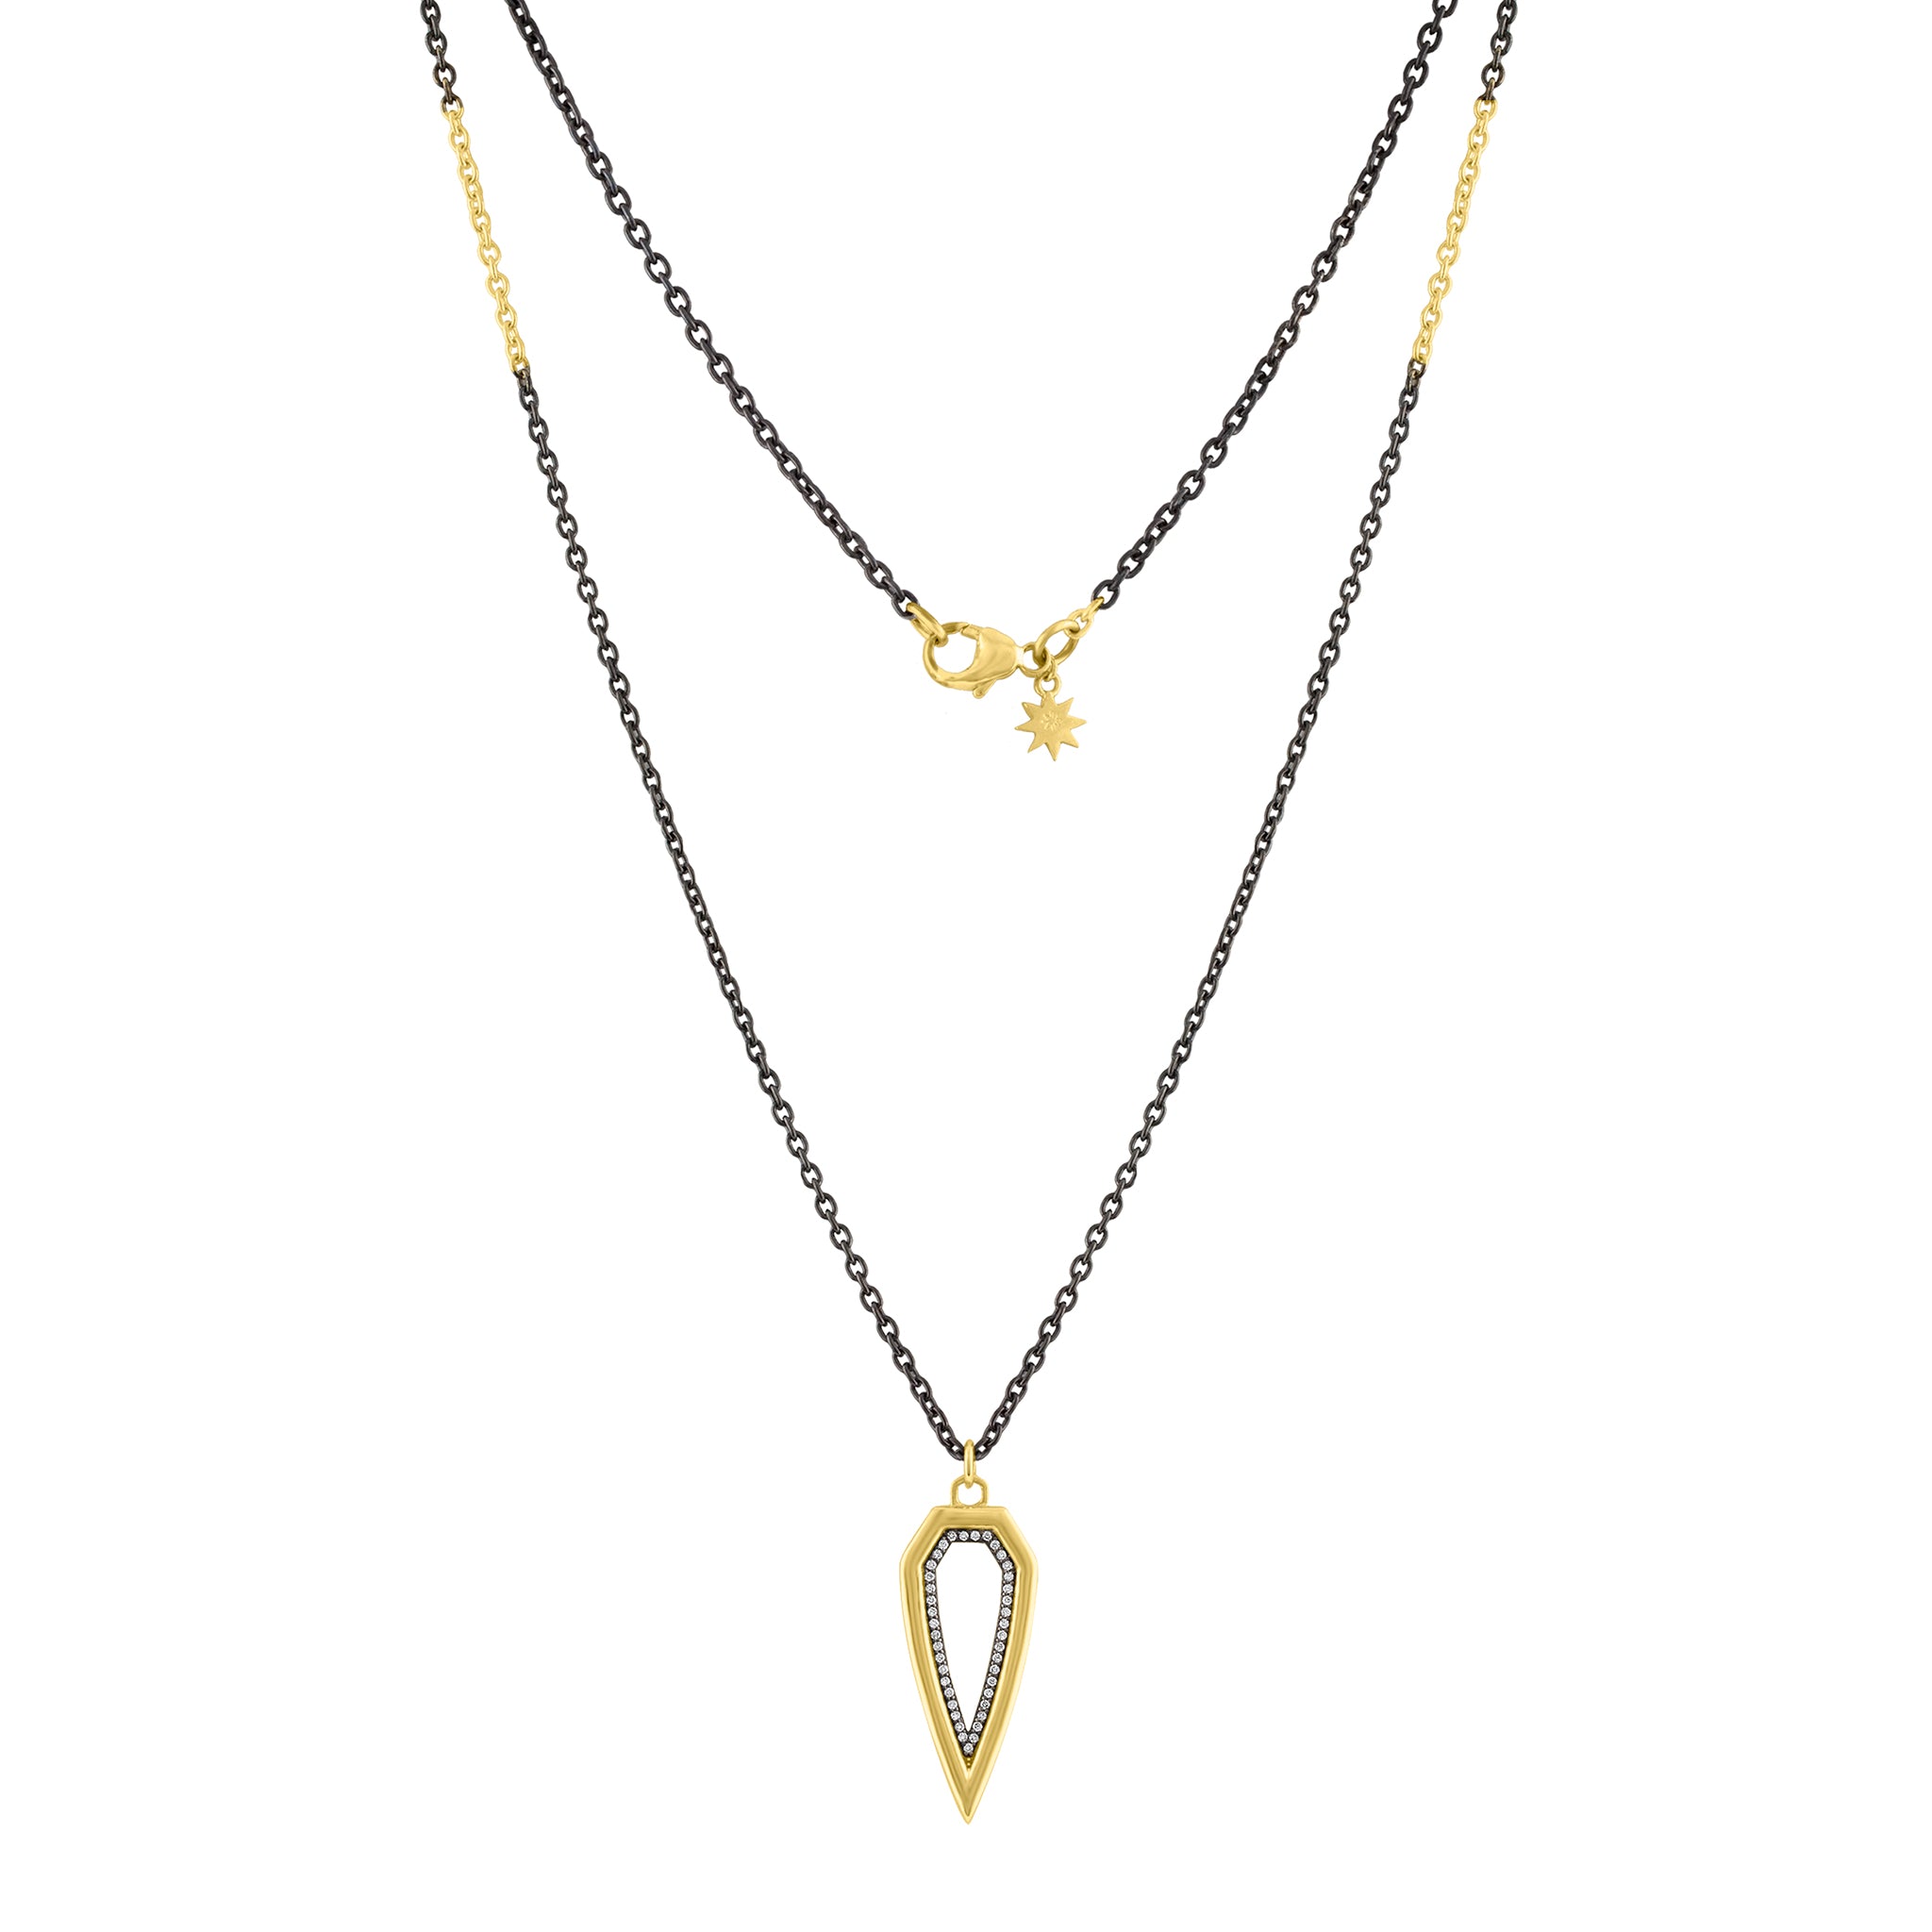 Shield Chain Necklace: 14k Gold, Diamond, Rhodium Plate Silver